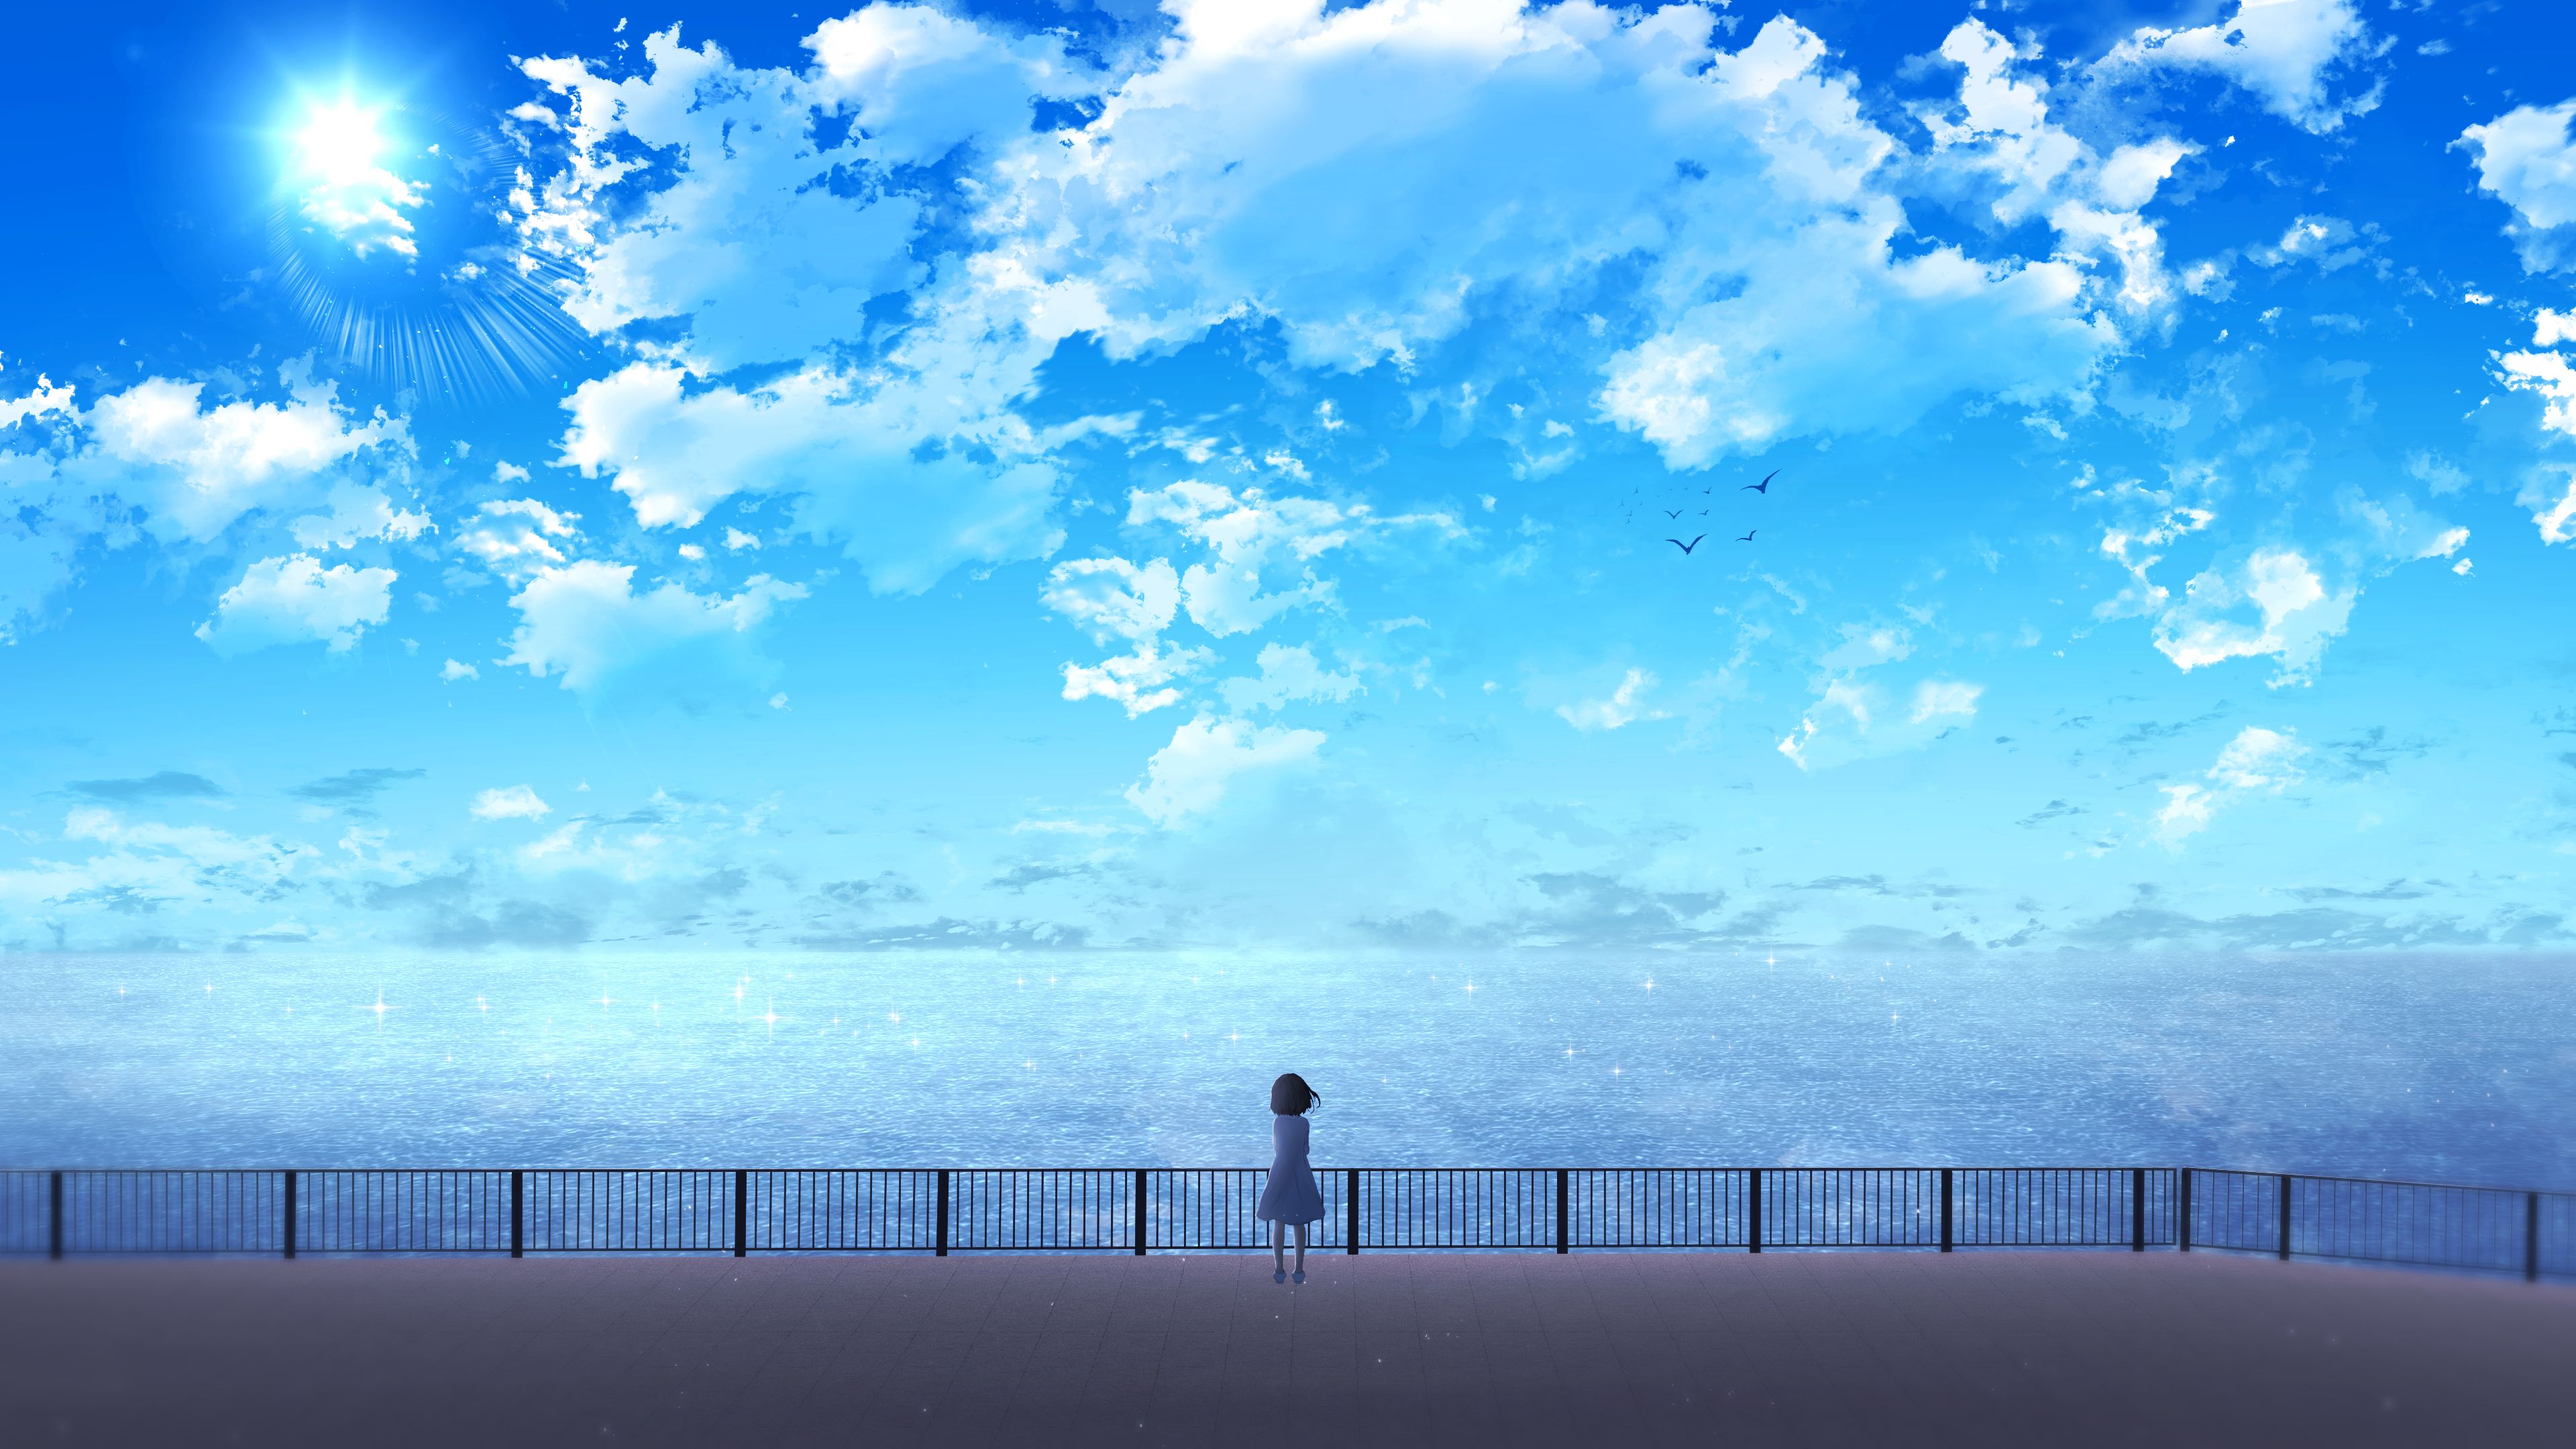 Anime Girl Near Ocean Wallpaper, HD Anime 4K Wallpaper, Image, Photo and Background